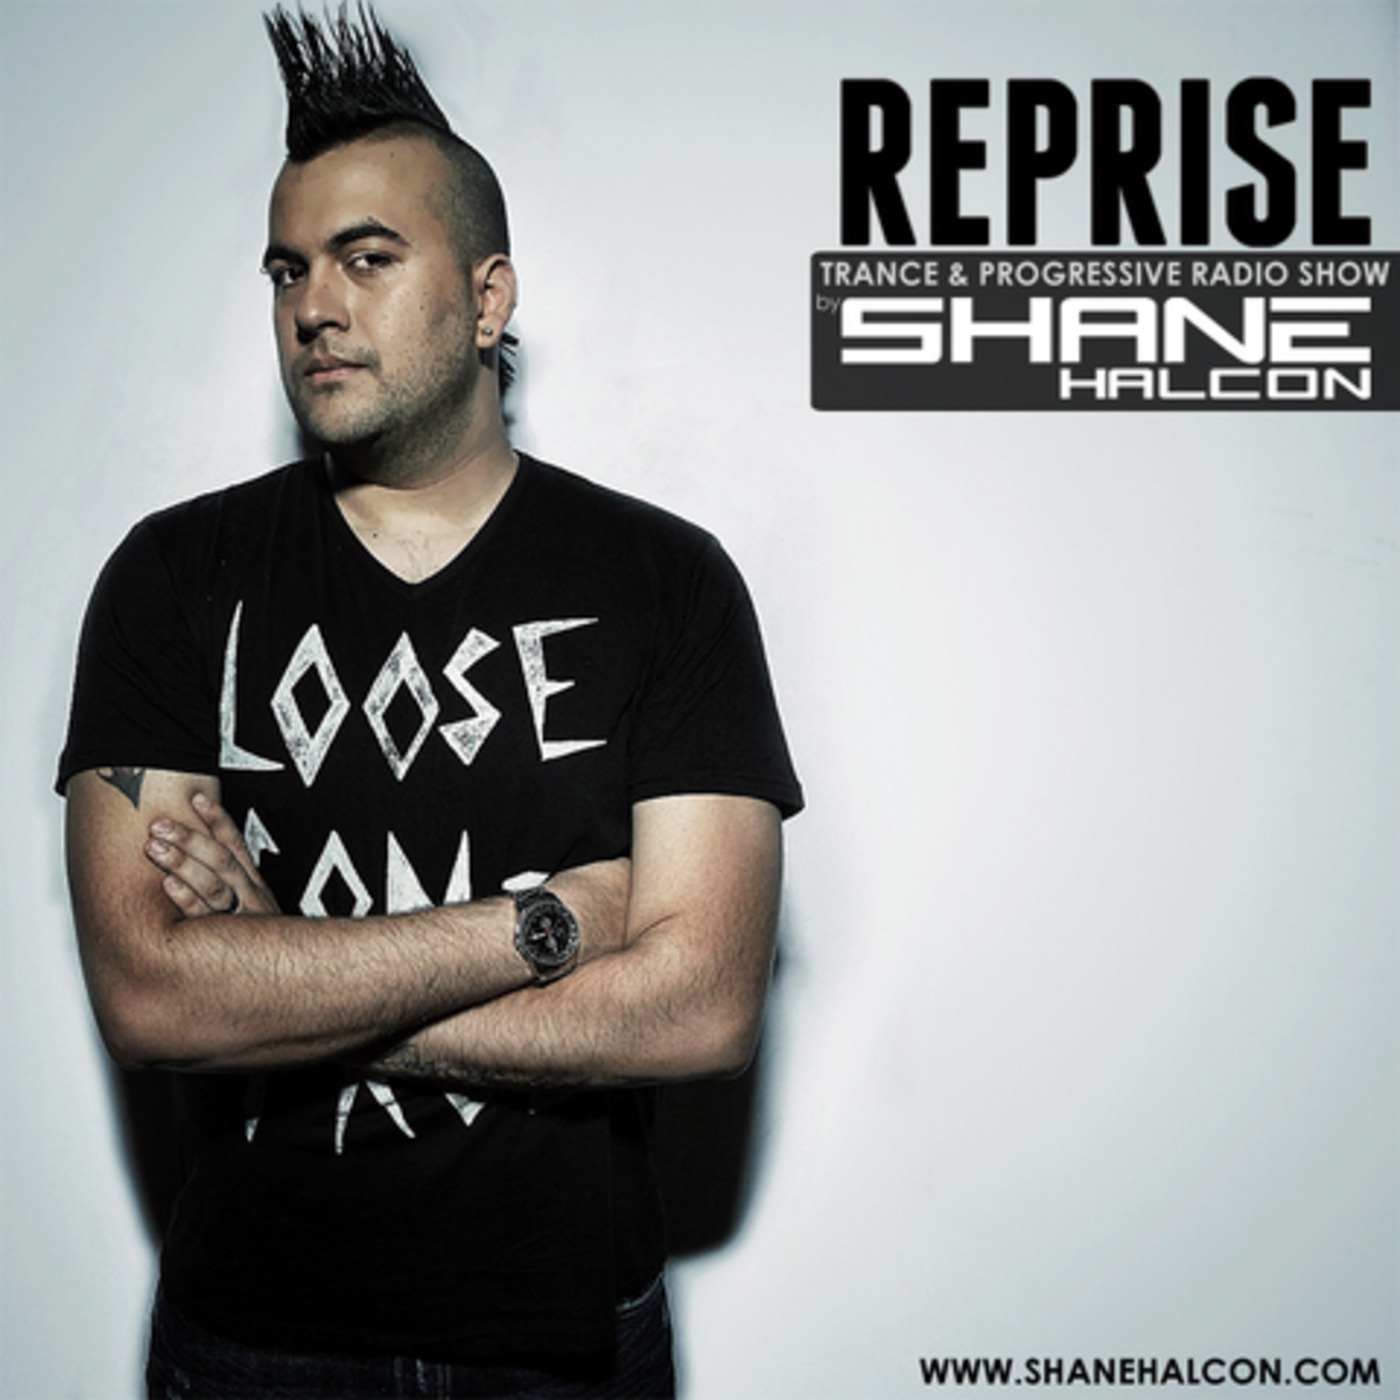 Shane Halcon - Reprise